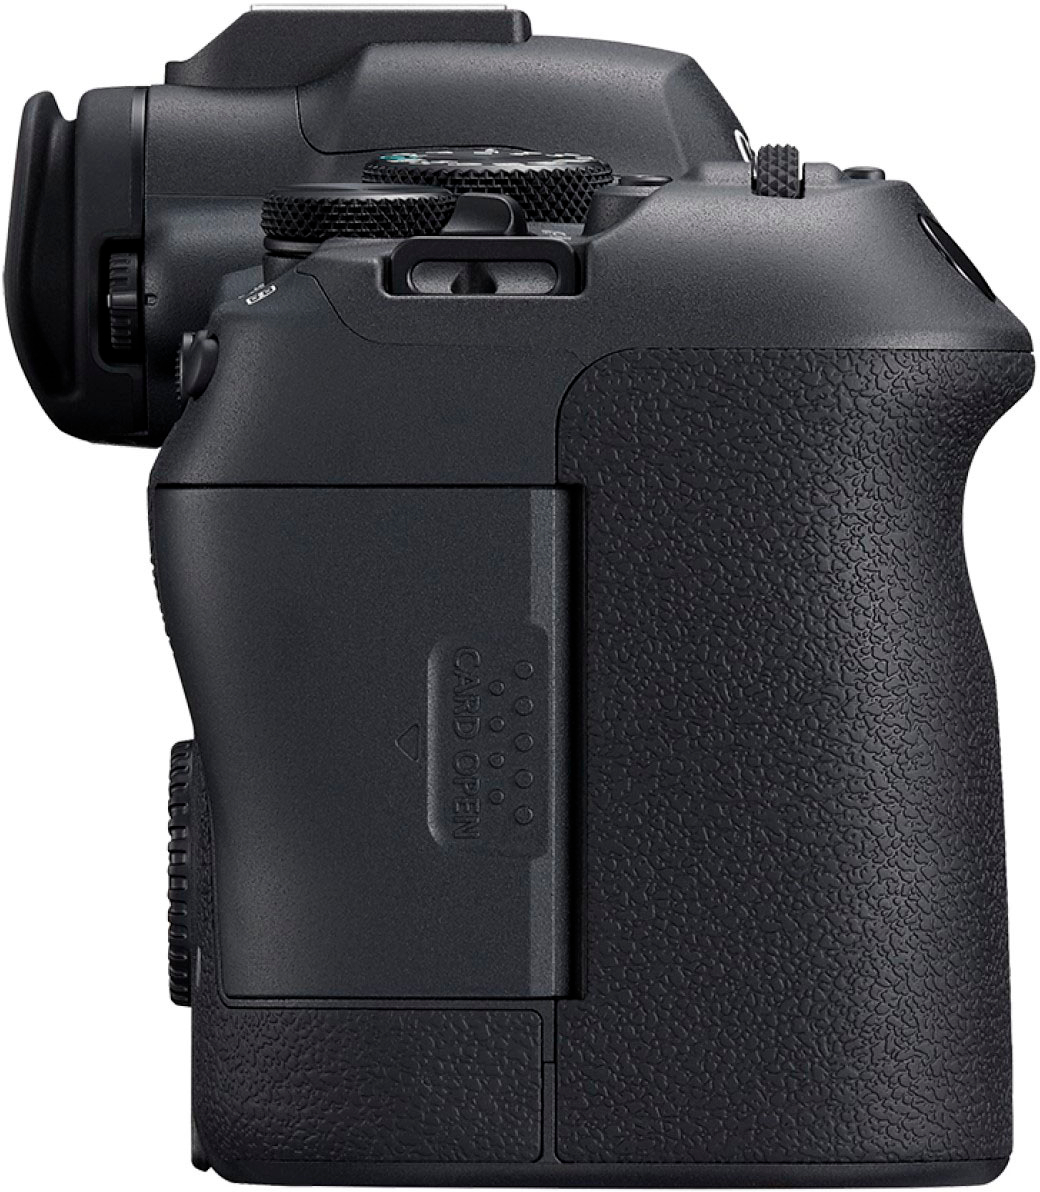 Canon EOS R6 Mark II Mirrorless Camera (Body Only) Black 5666C002 - Best Buy